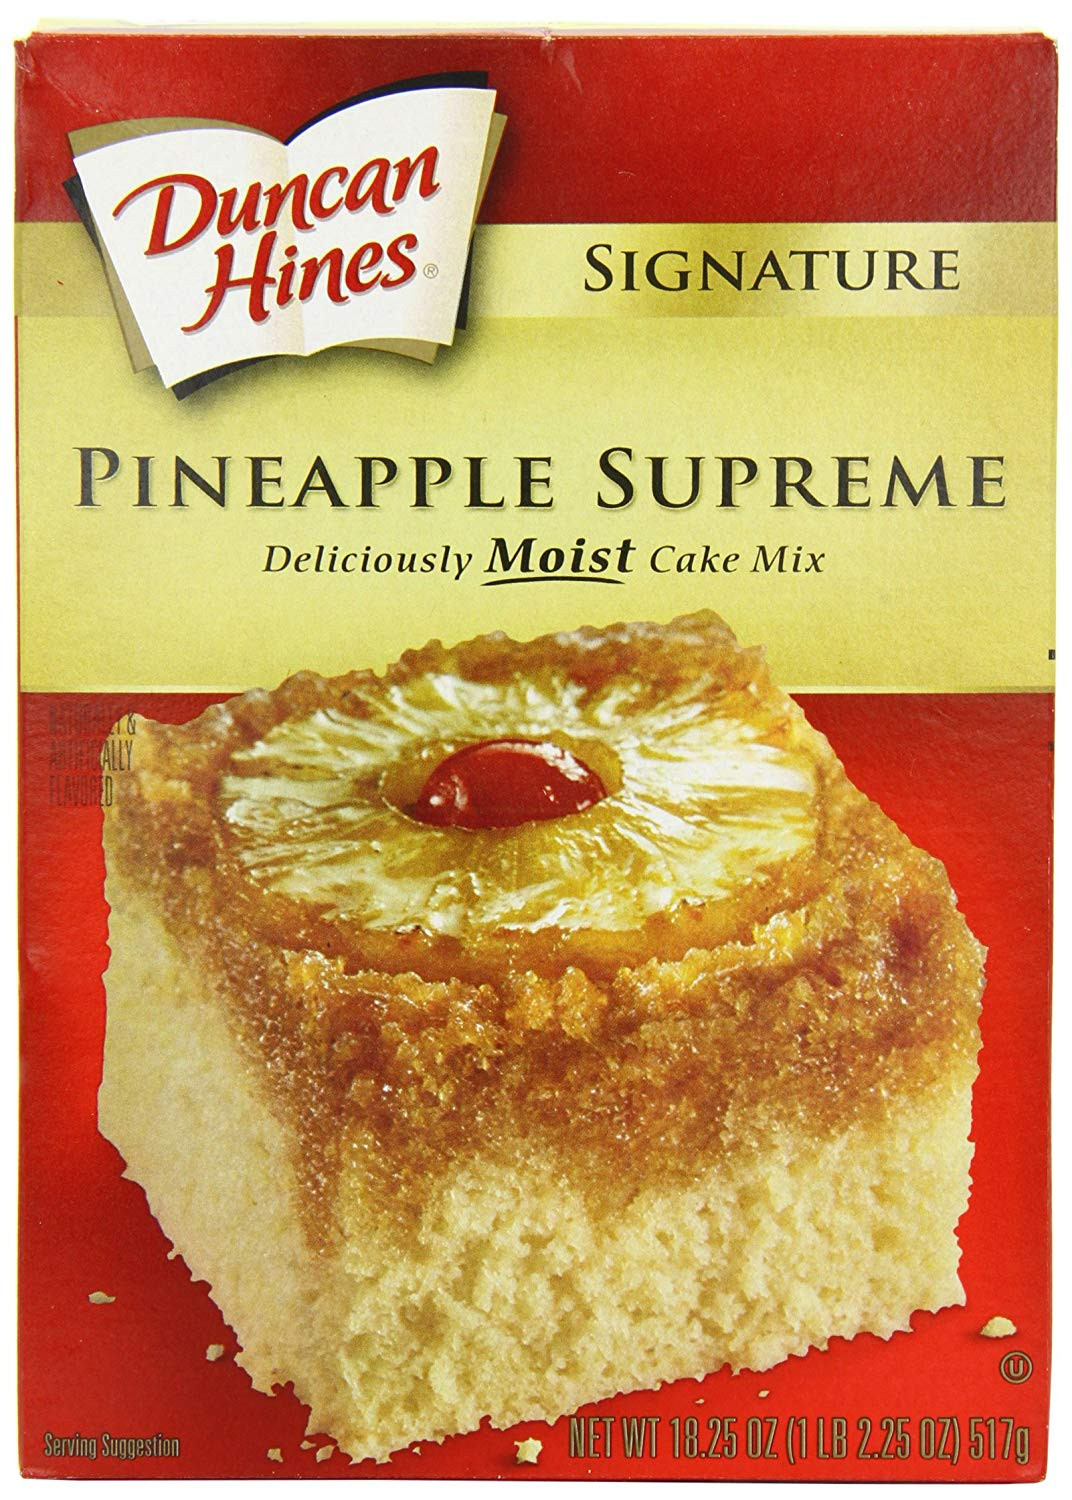 Pineapple Upside Down Cake Using Cake Mix
 duncan hines pineapple upside down cake